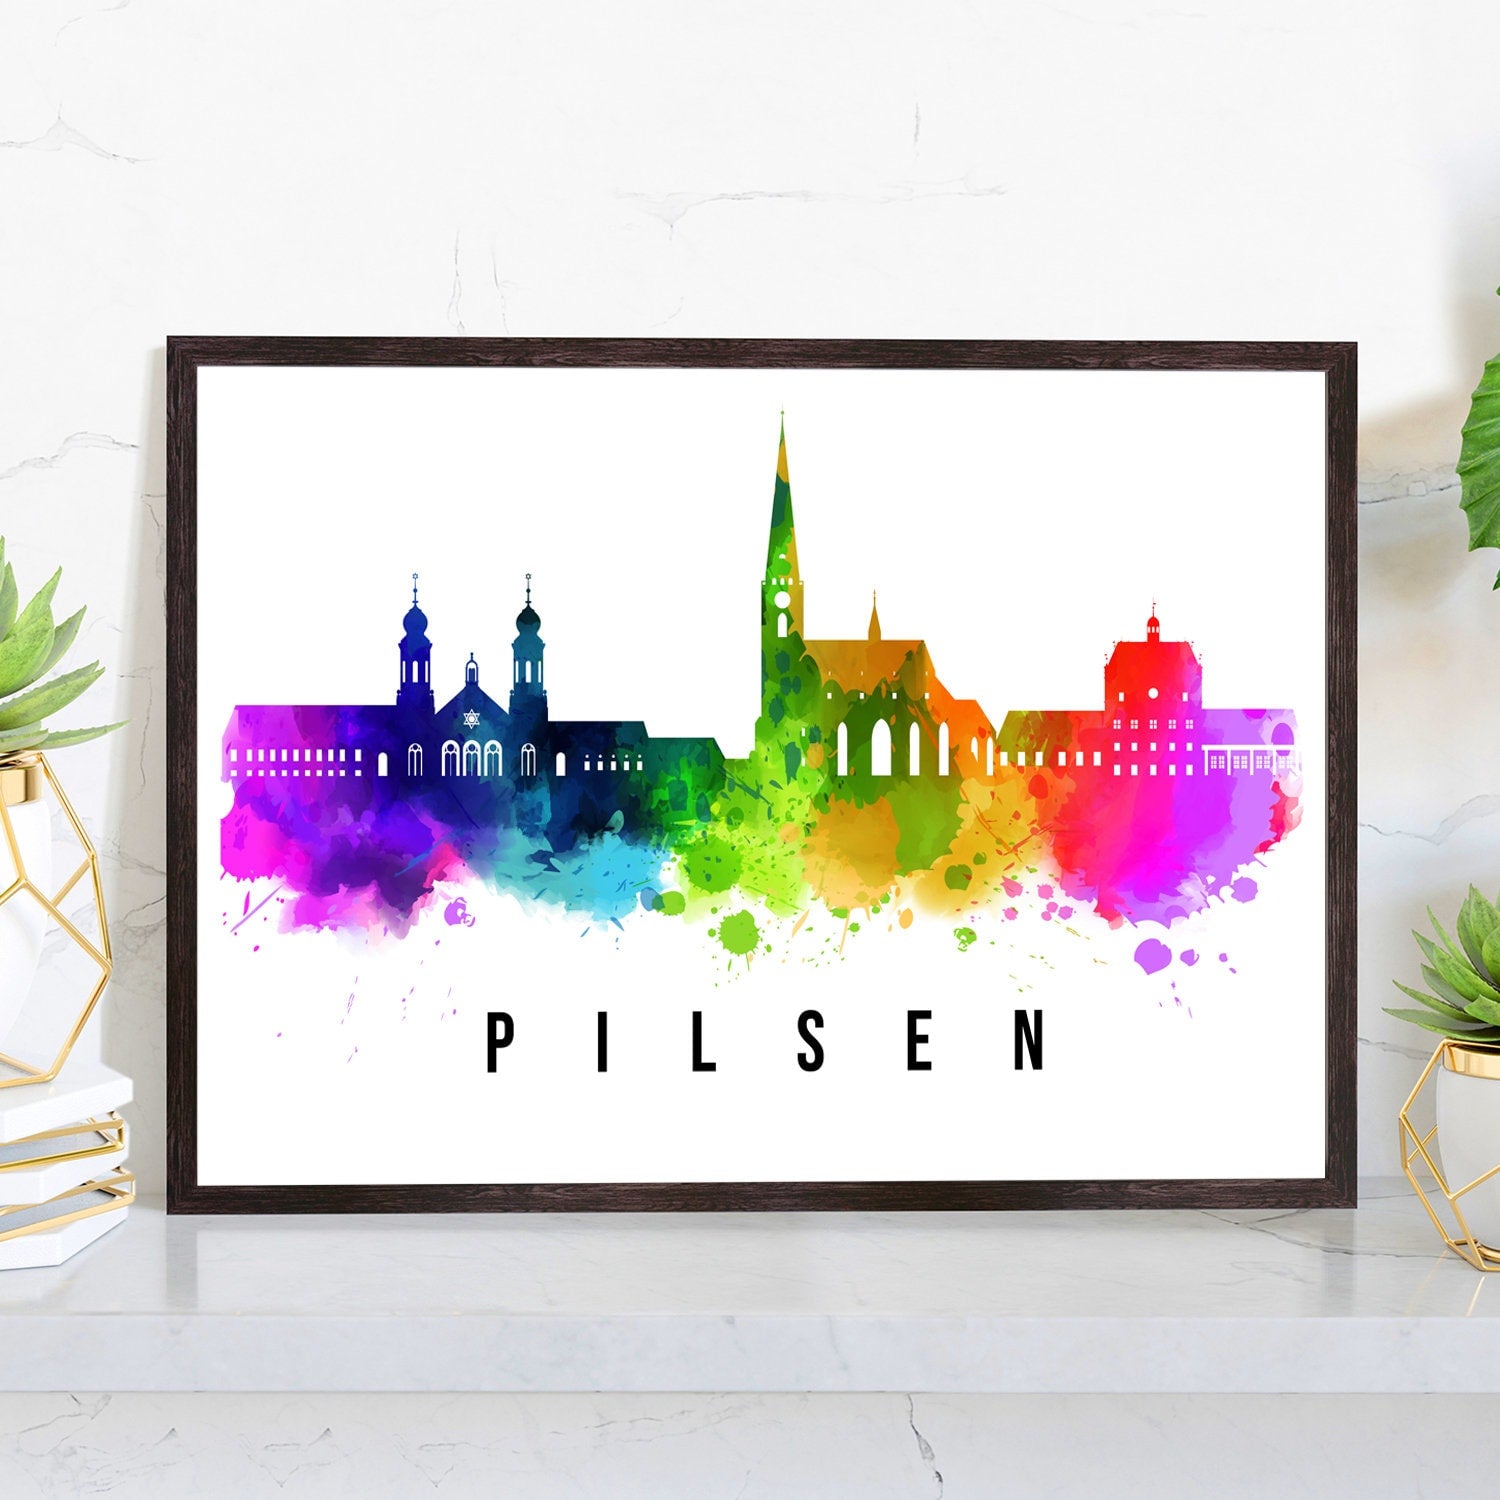 Pilsen Czech Republic Poster, Skyline poster cityscape poster, Landmark City Illustration poster, Home wall decoration, Office wall art